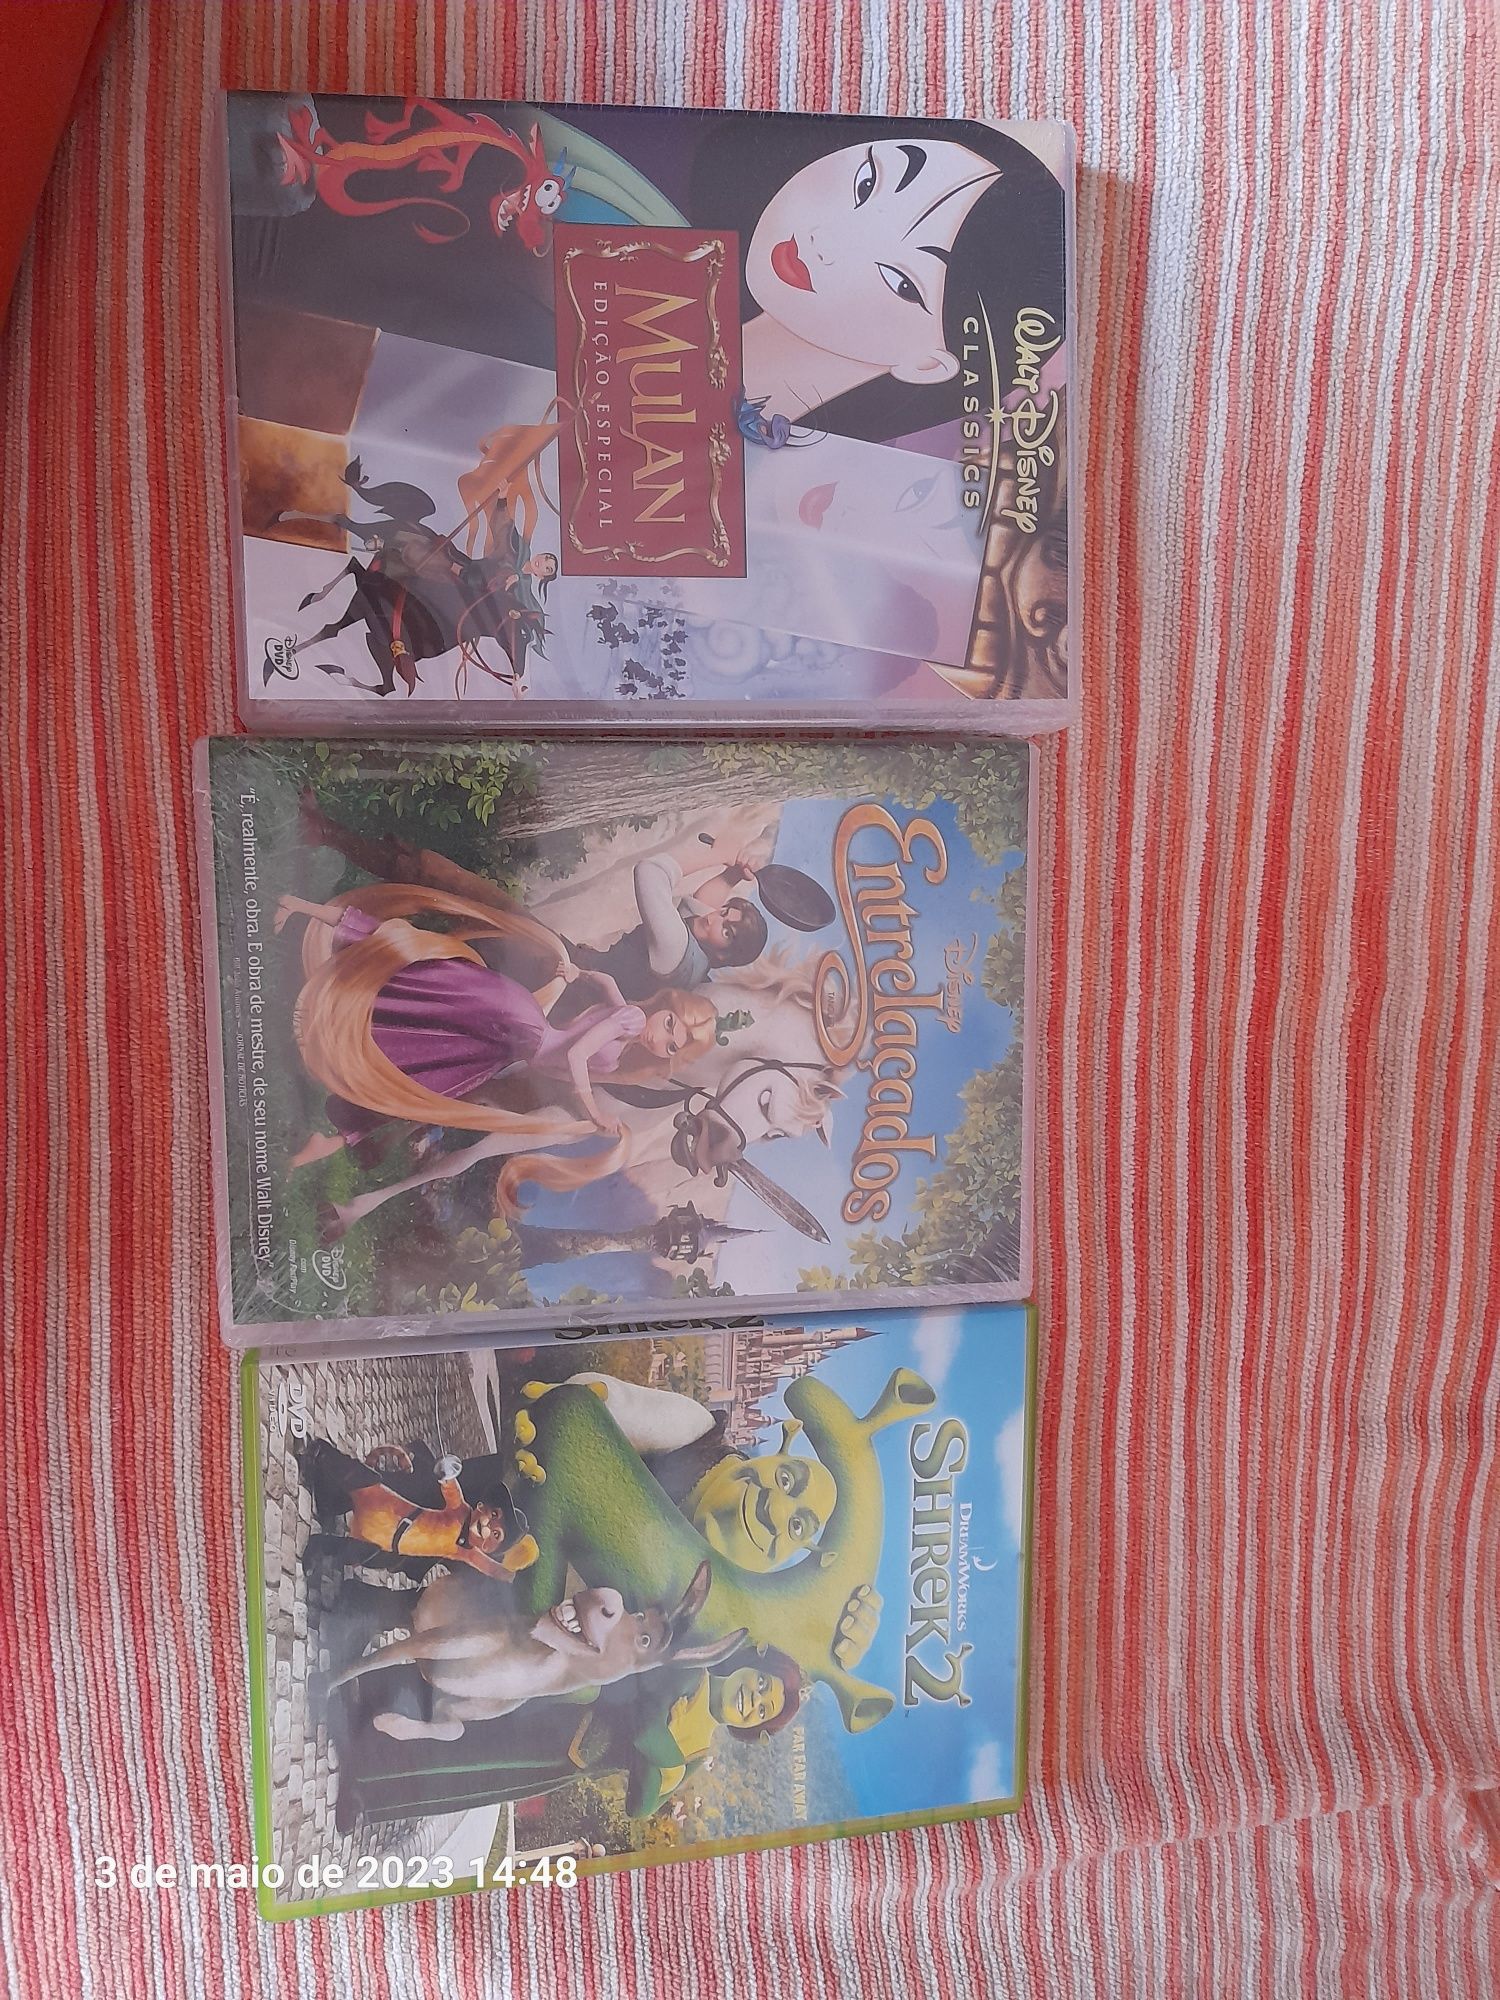 DVD's filmes da Disney